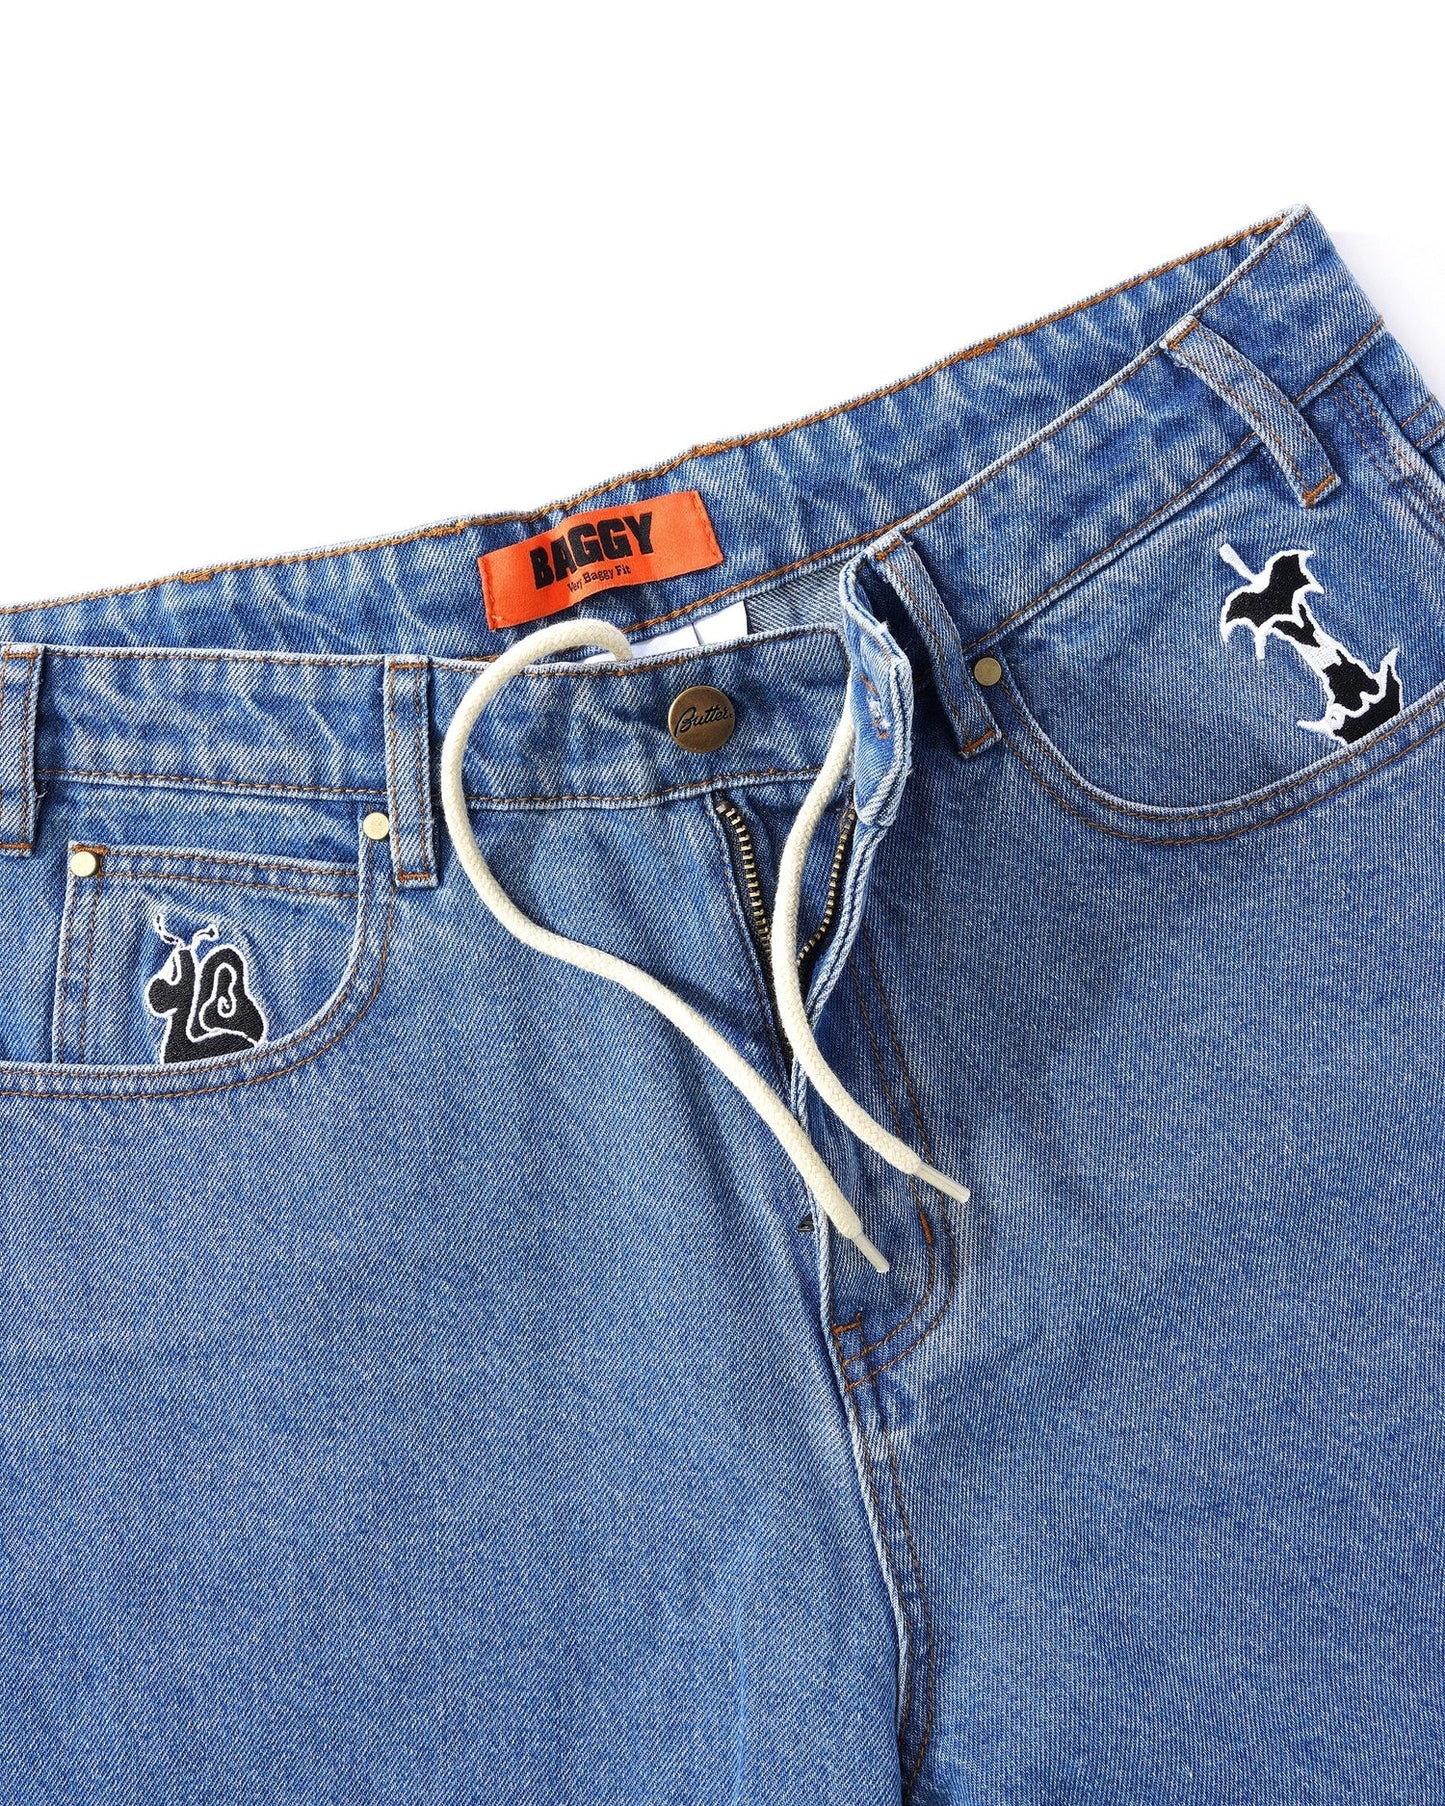 Critter Denim Jeans - Washed Indigo